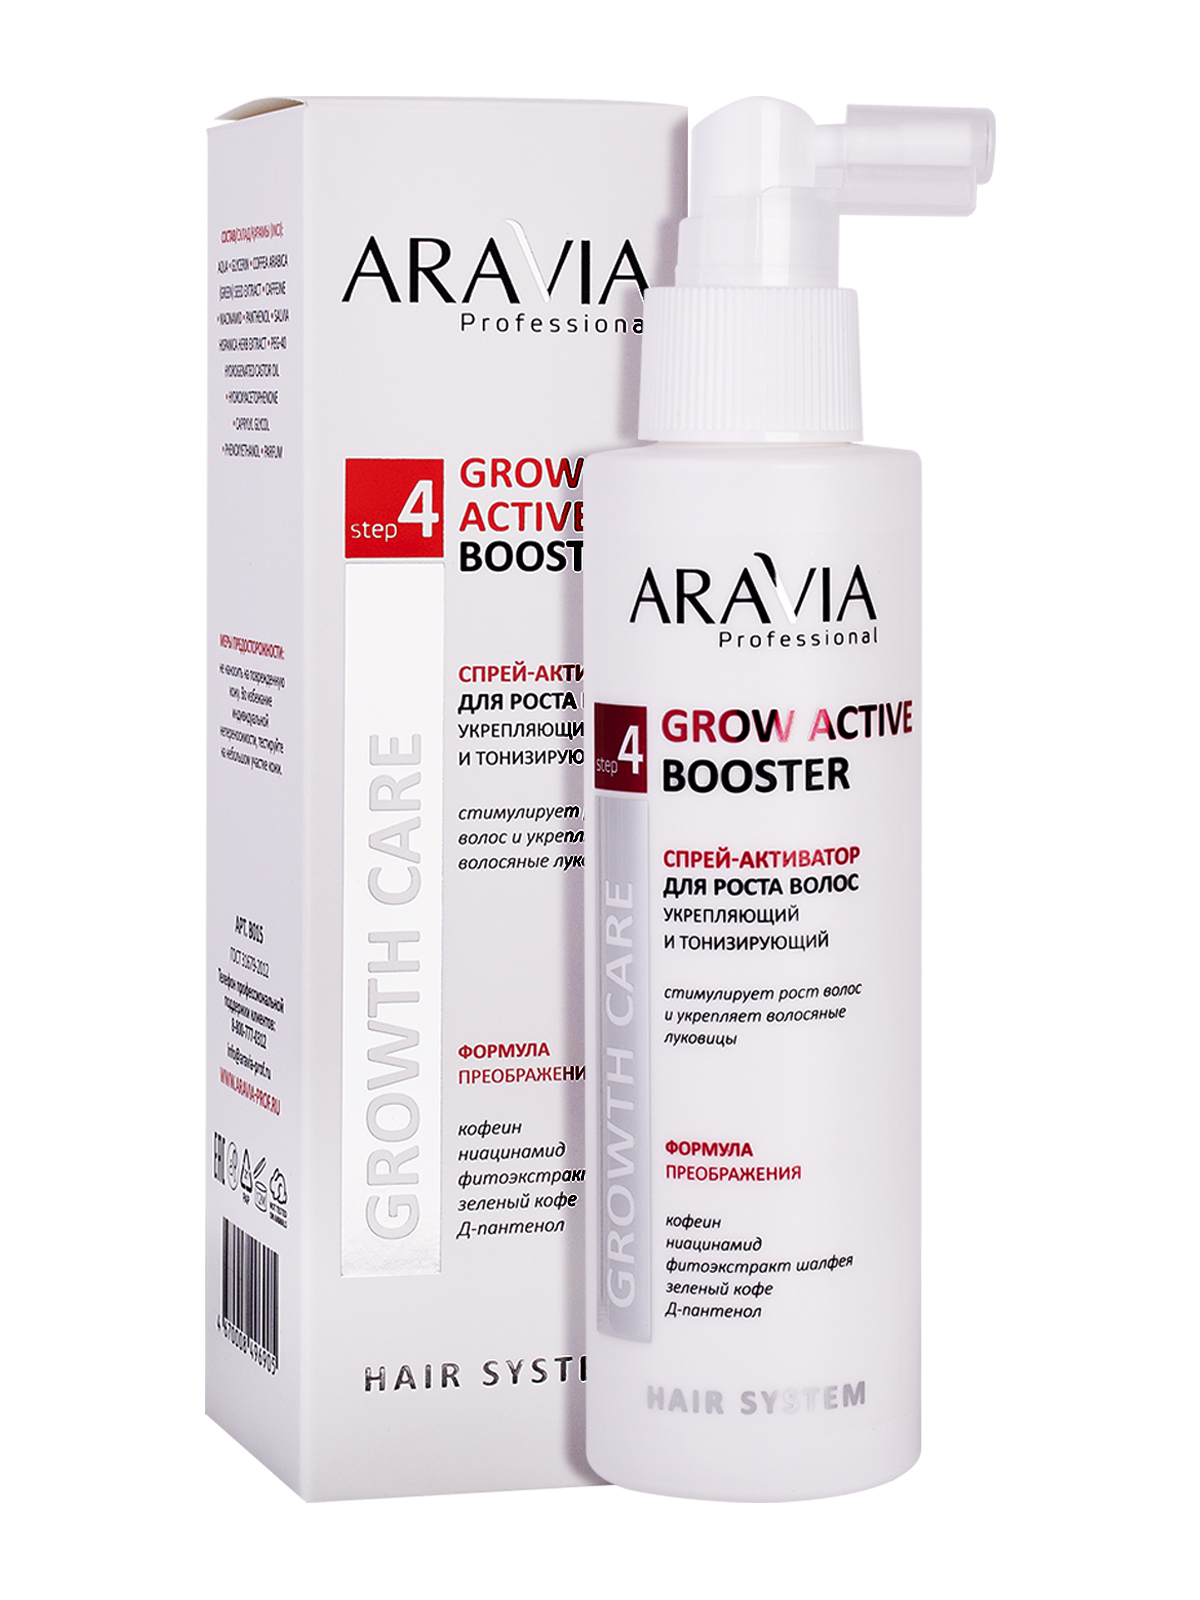 Активатор для кожи. Спрей активатор роста волос Аравия. Aravia grow Active. C Прей для роста волос. Для роста волос несмываемое средство.